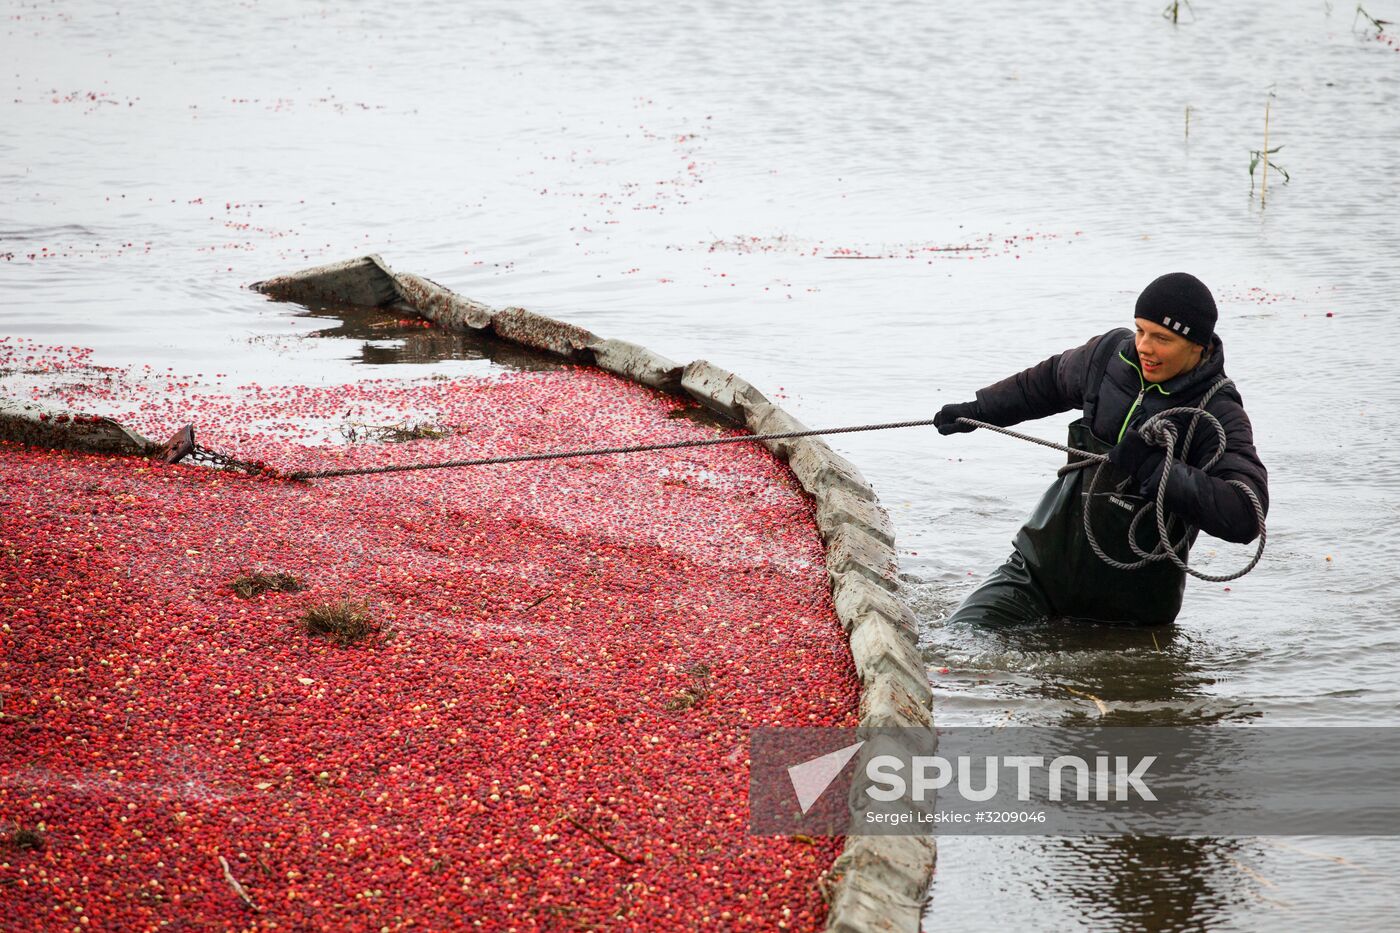 Collection of cranberries in Belarus